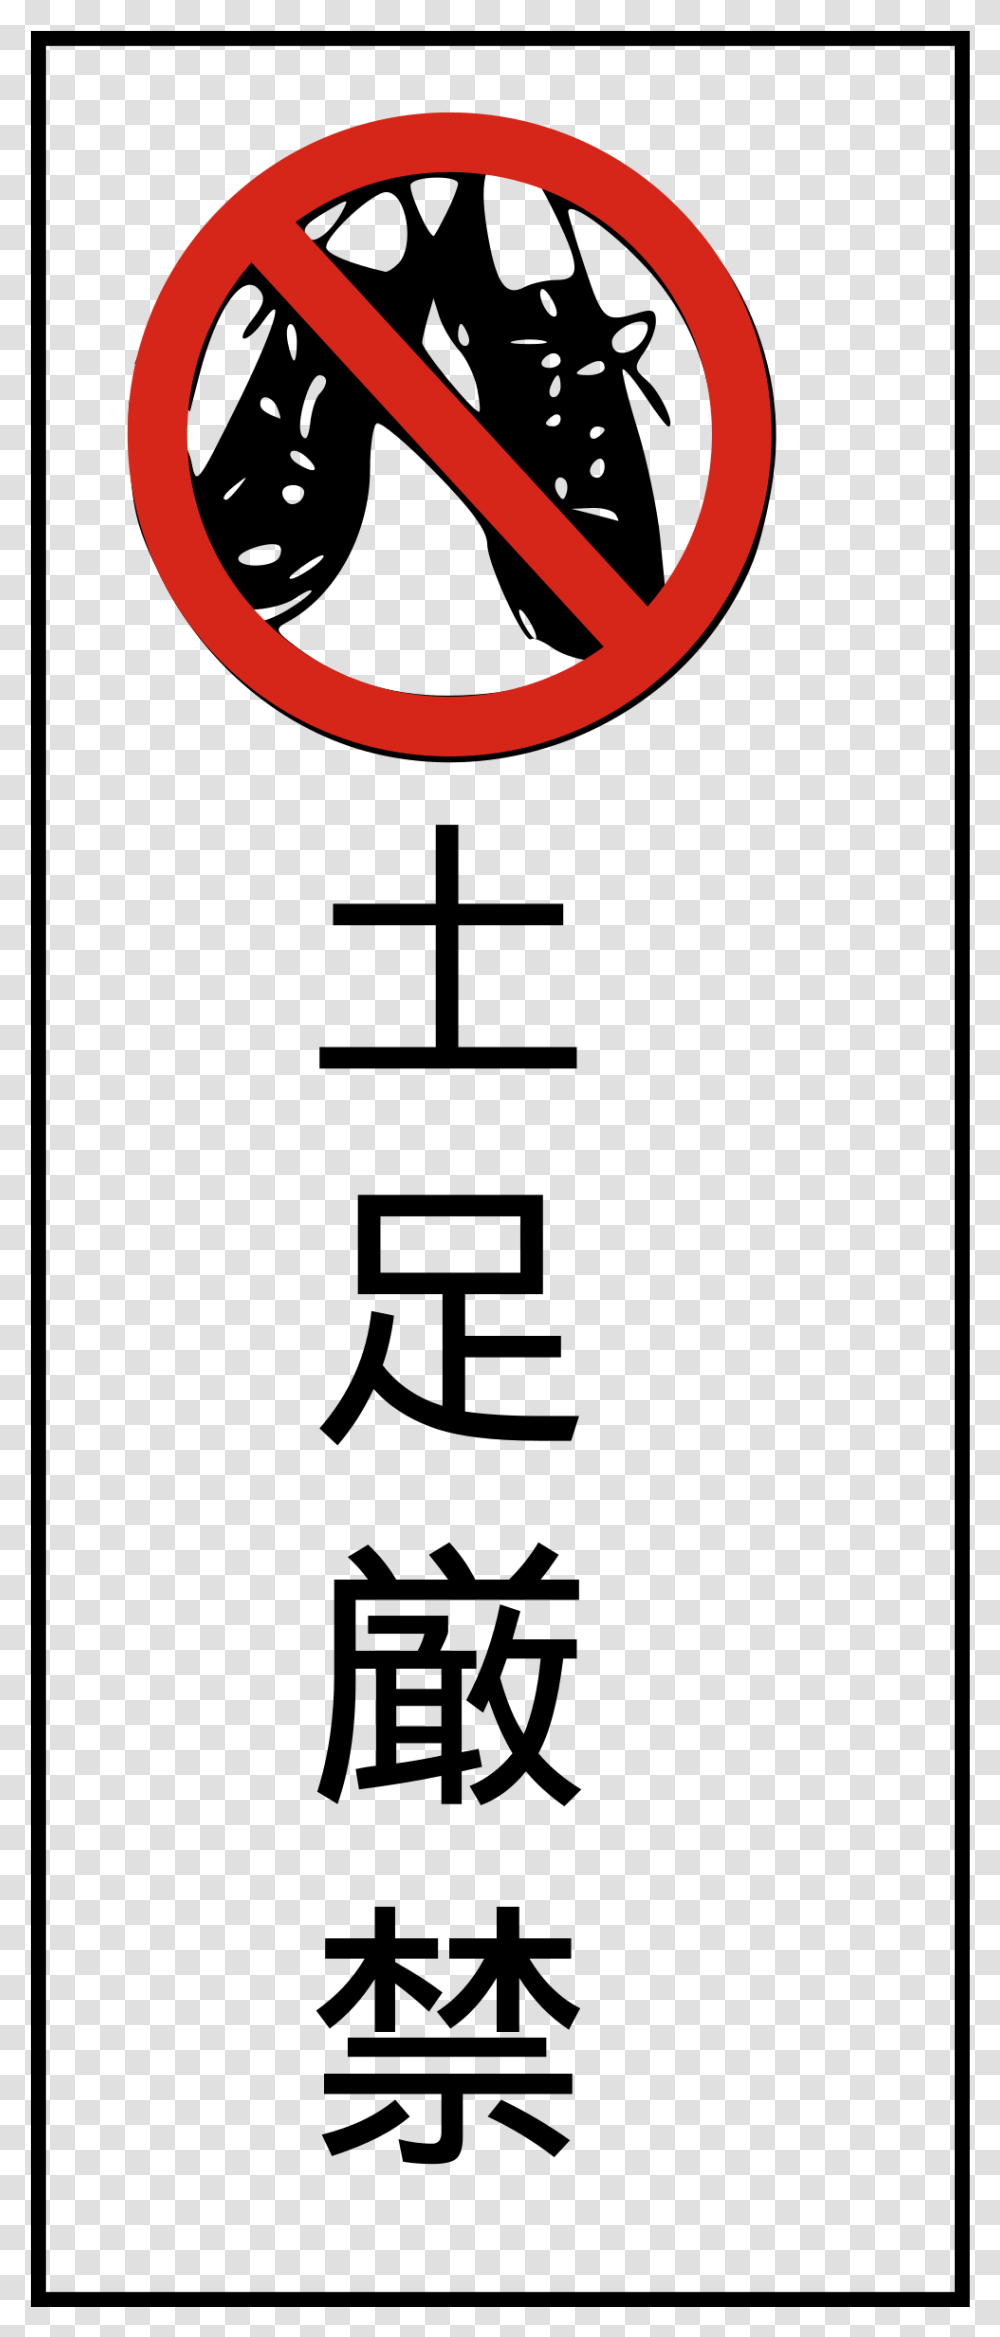 Japanese Text Please Remove Shoes Sign Japan, Plant, Food, Fruit, Produce Transparent Png